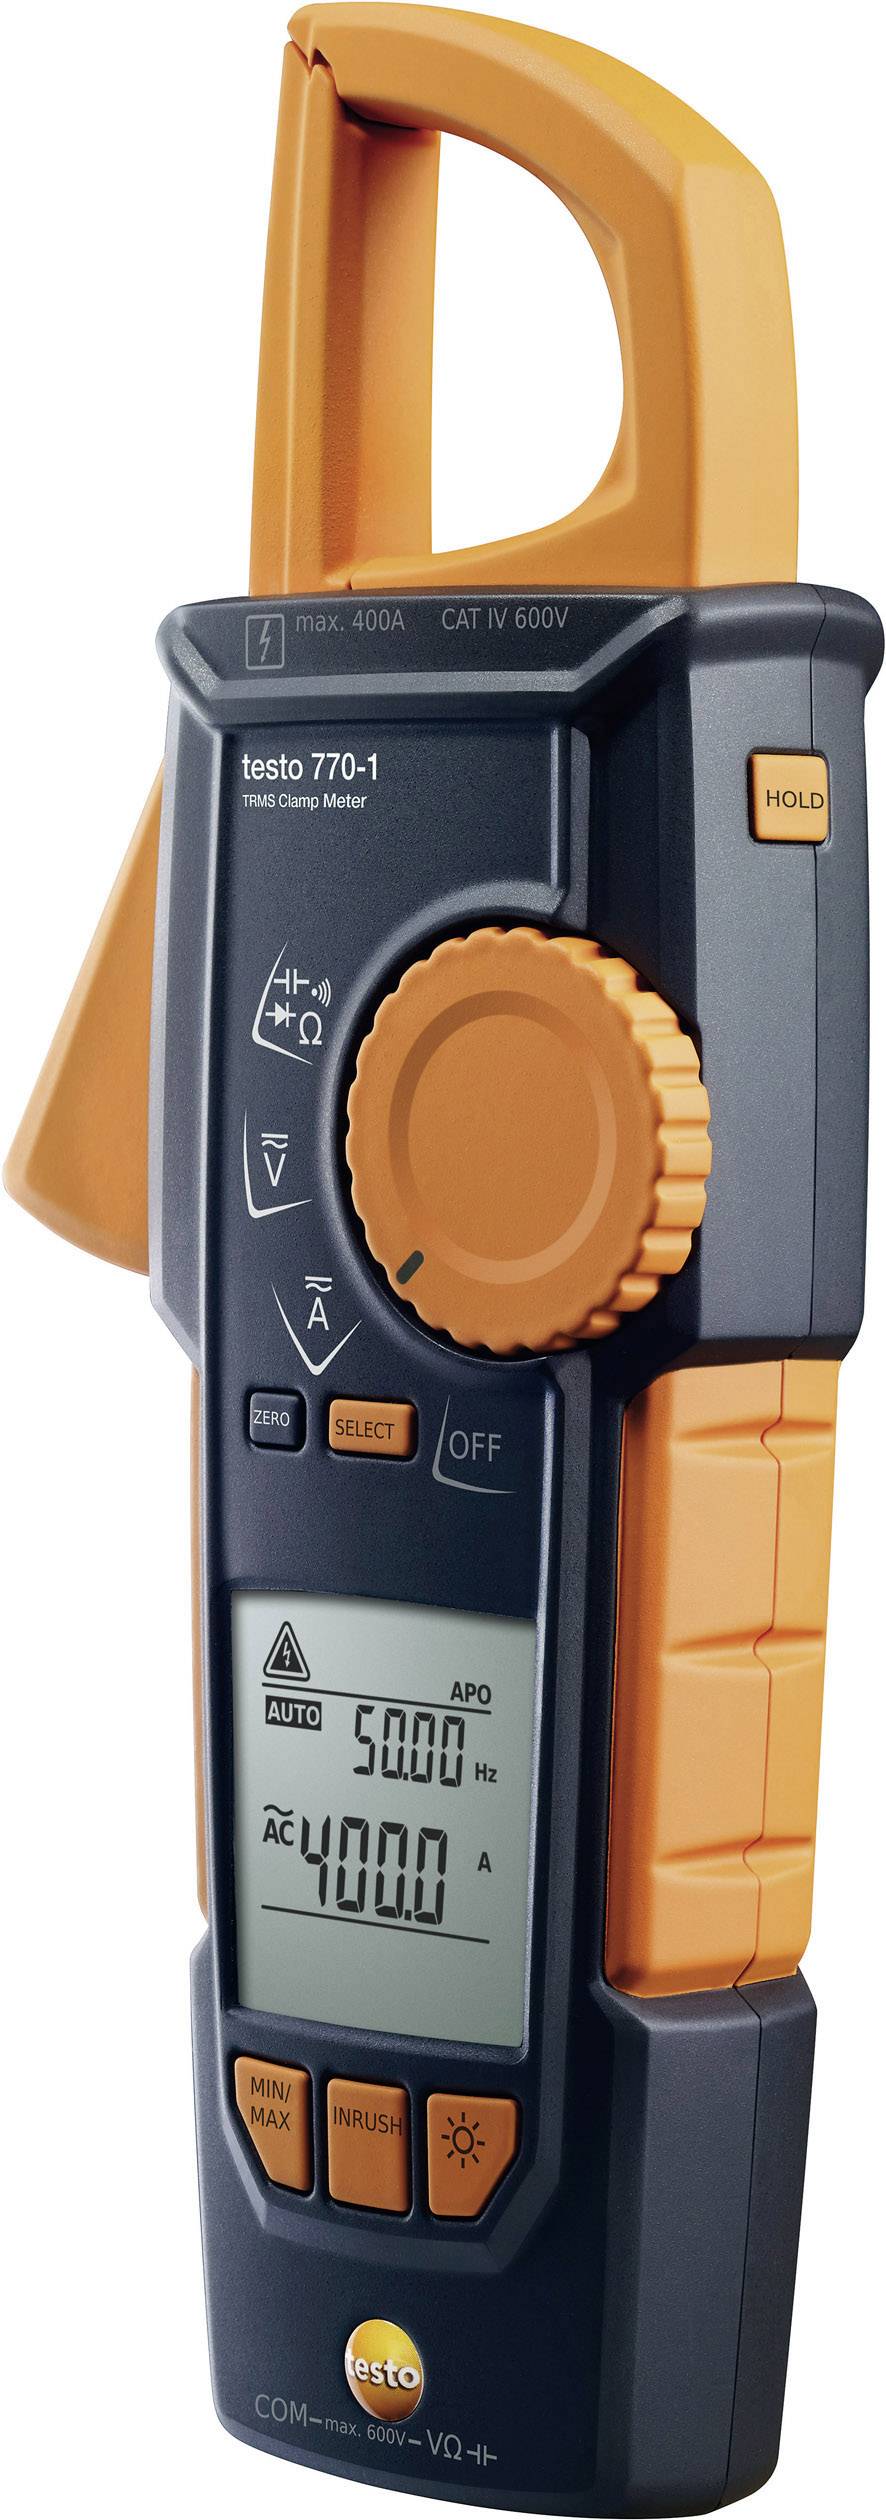 testo 770-1 Clamp meter, Handheld Digital CAT III 1000 V, IV 600 V 4000 | Conrad.com